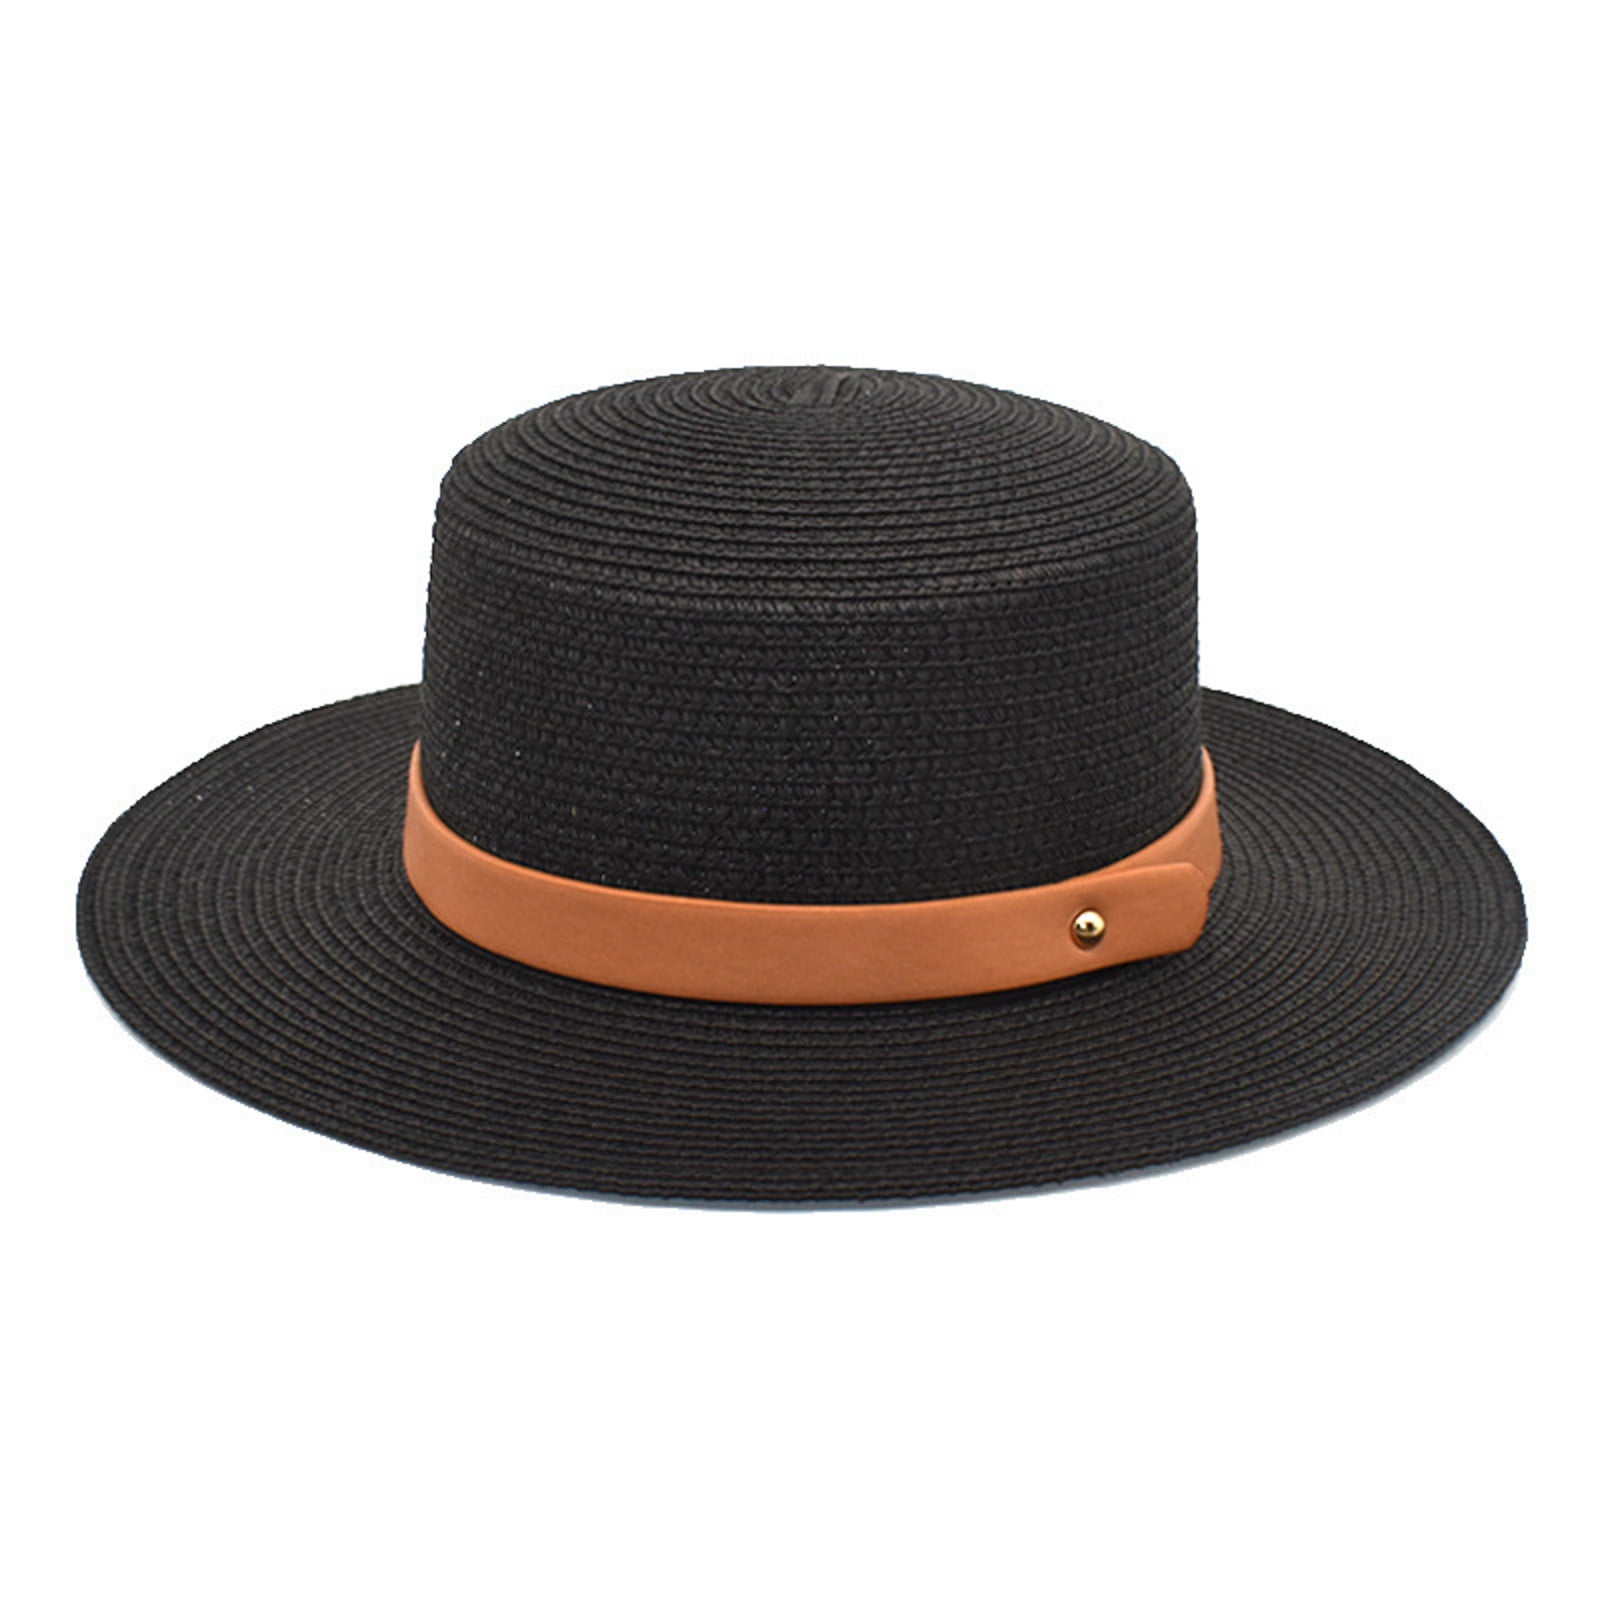 JDEFEG Hats for Men Women Work Hat Adults Unisex Retro Western